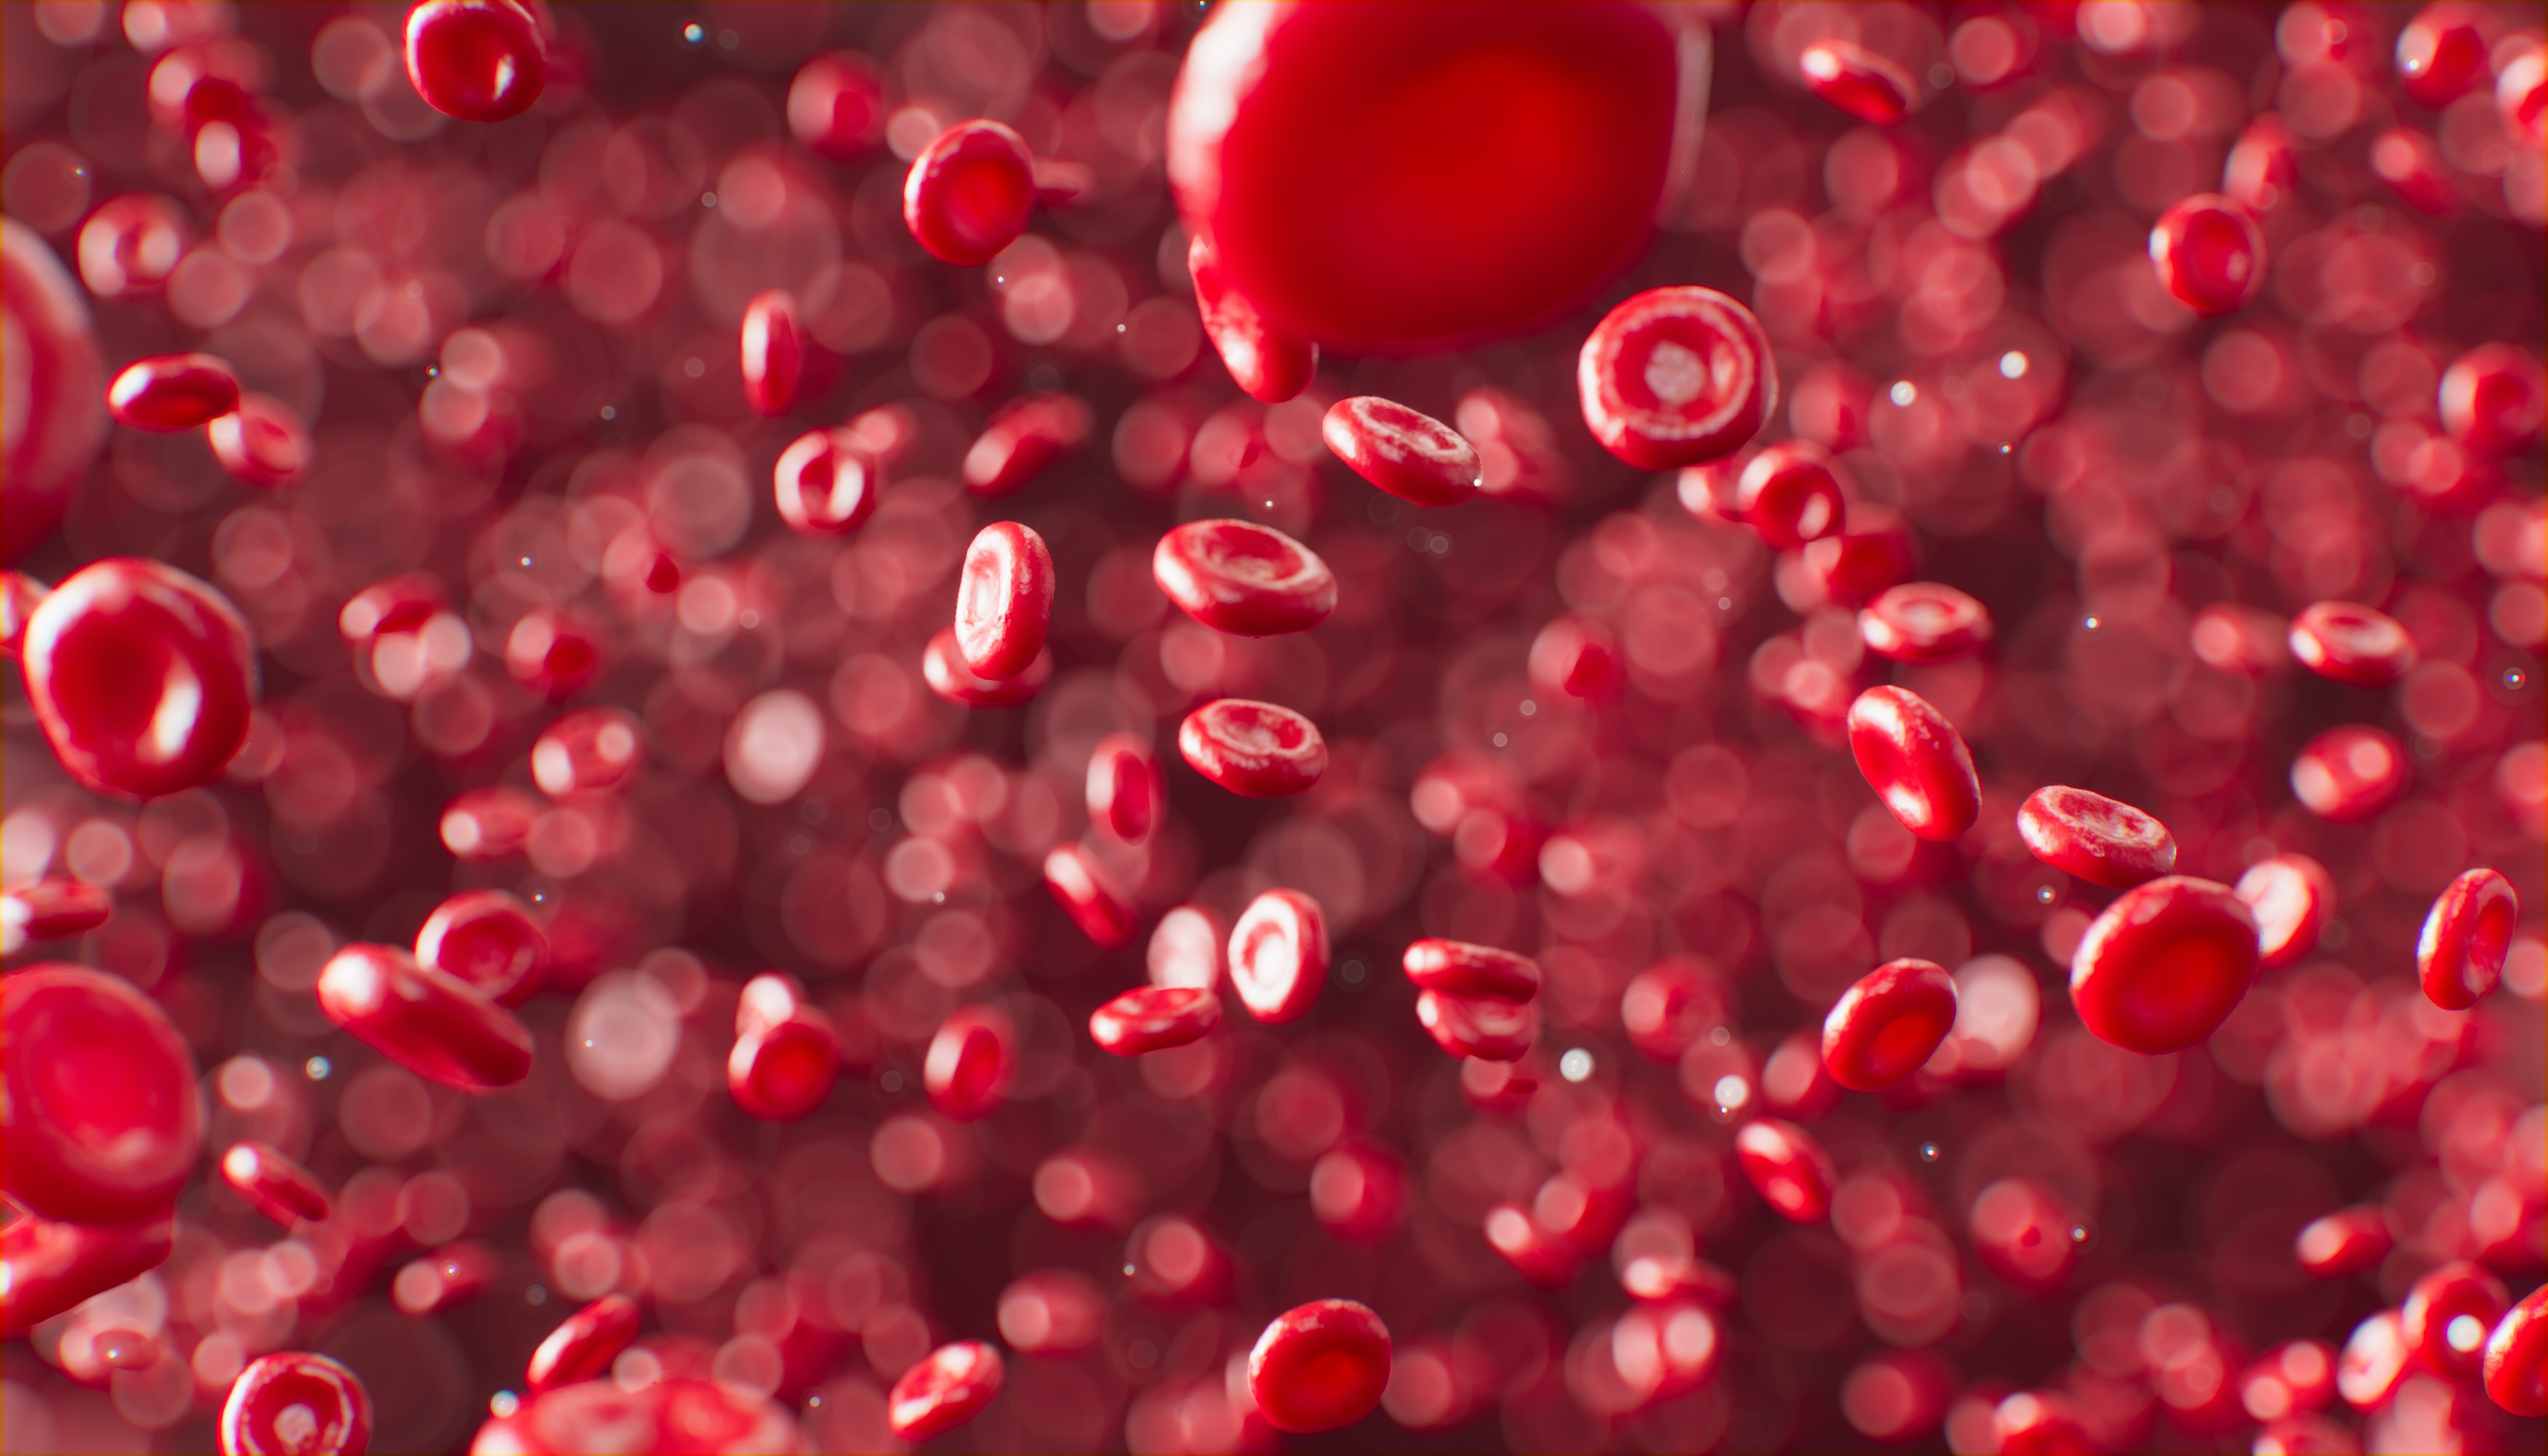 eritrociti sniženi eritrociti povišeni eritrociti krvna slika